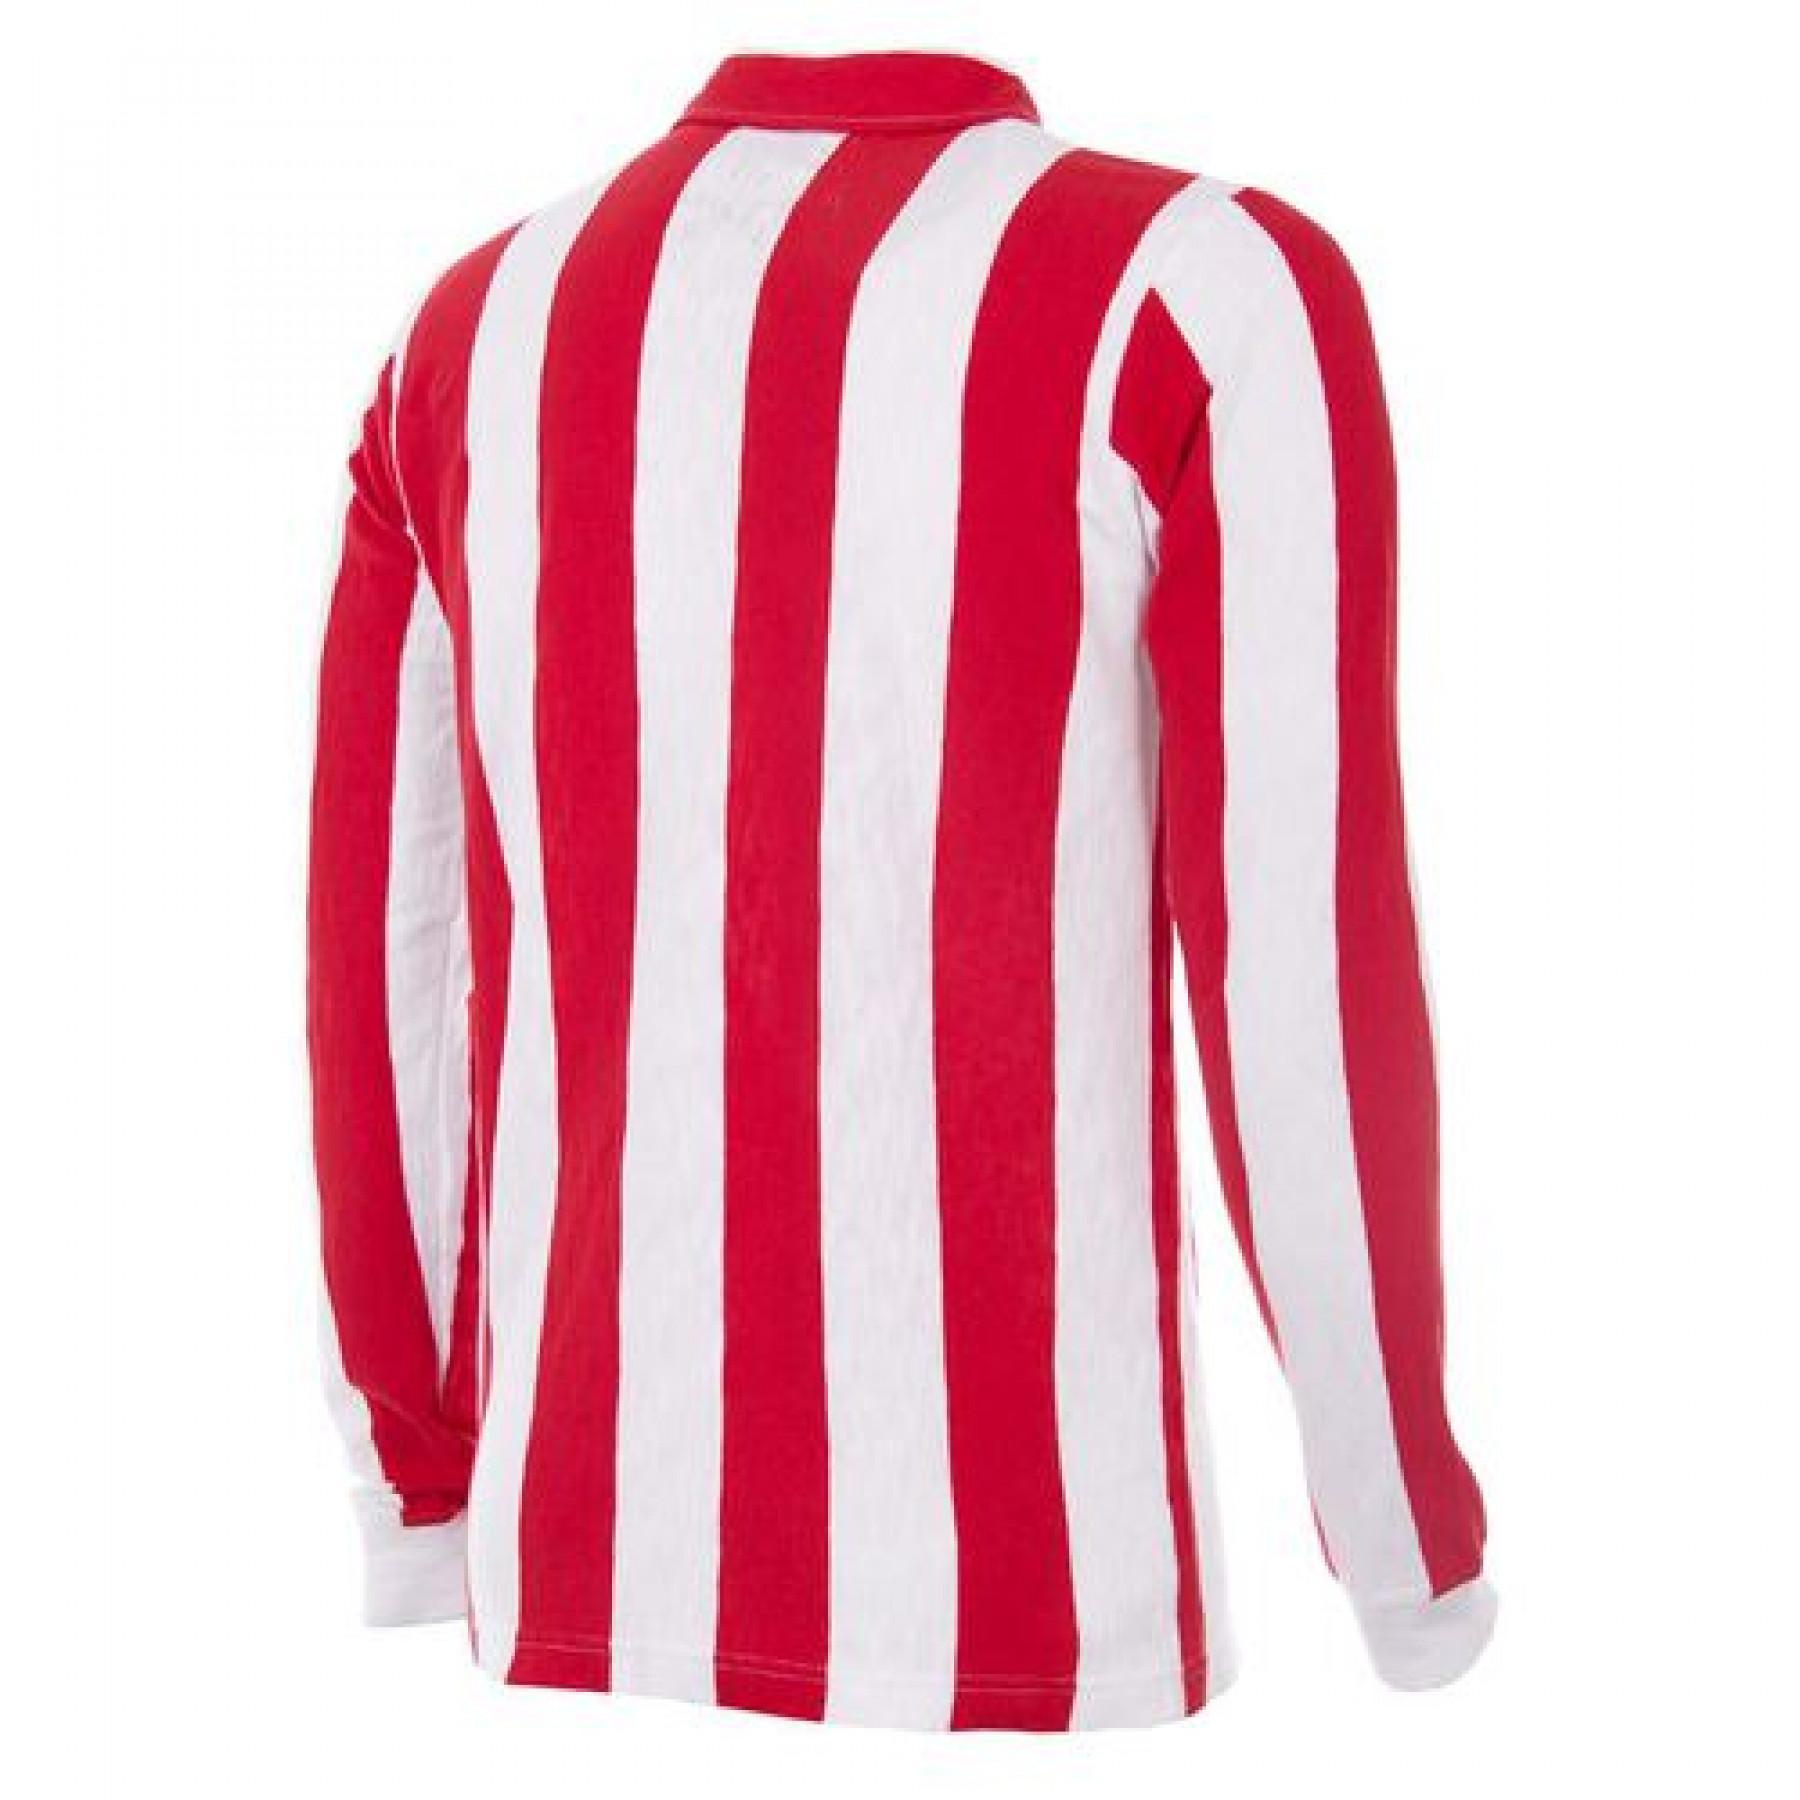 Camiseta Copa Football Atlético Madrid 1939 - 40 Retro